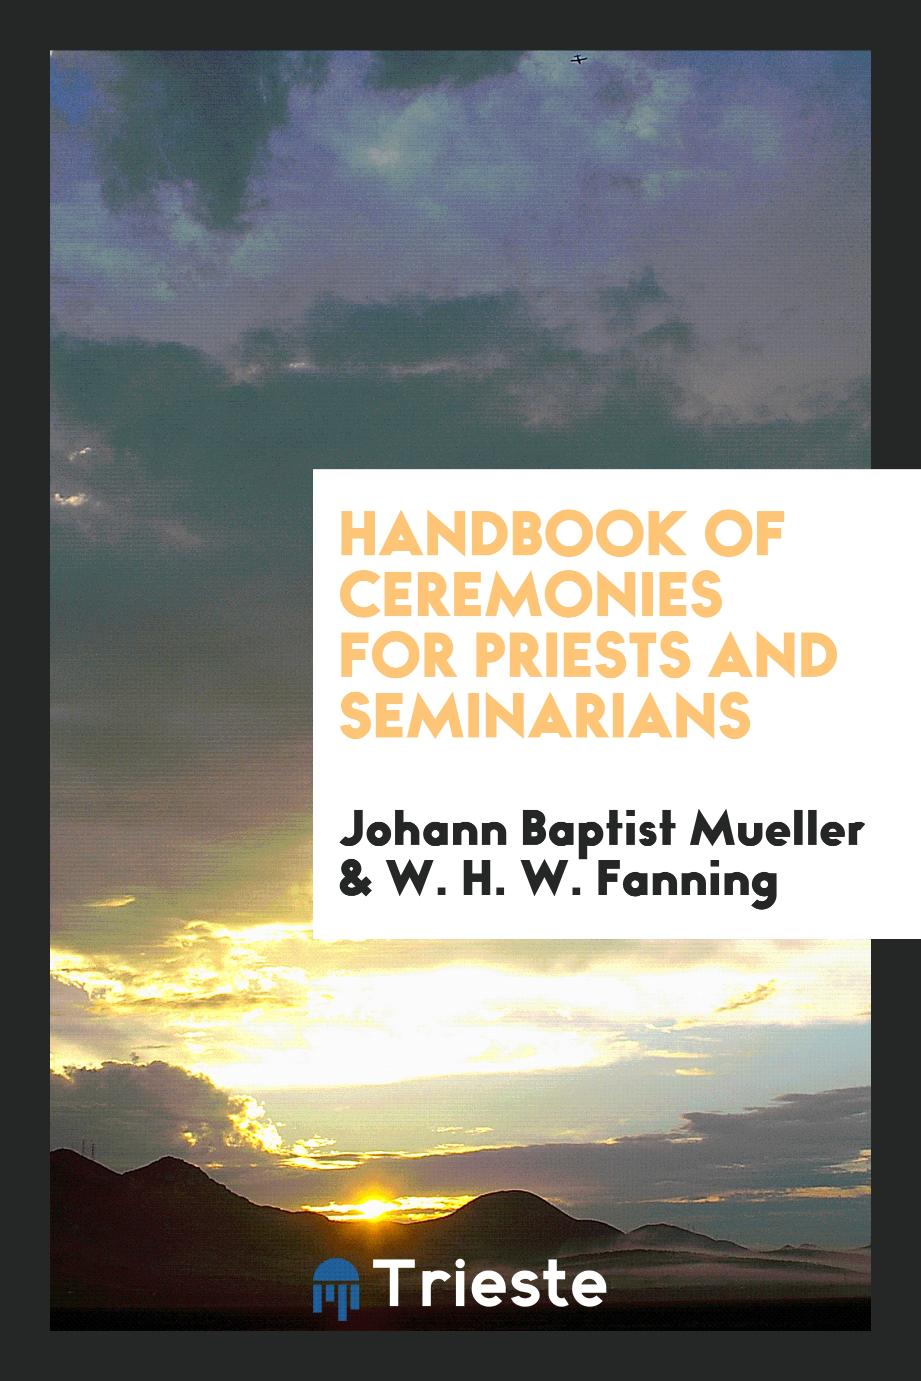 Handbook of ceremonies for priests and seminarians